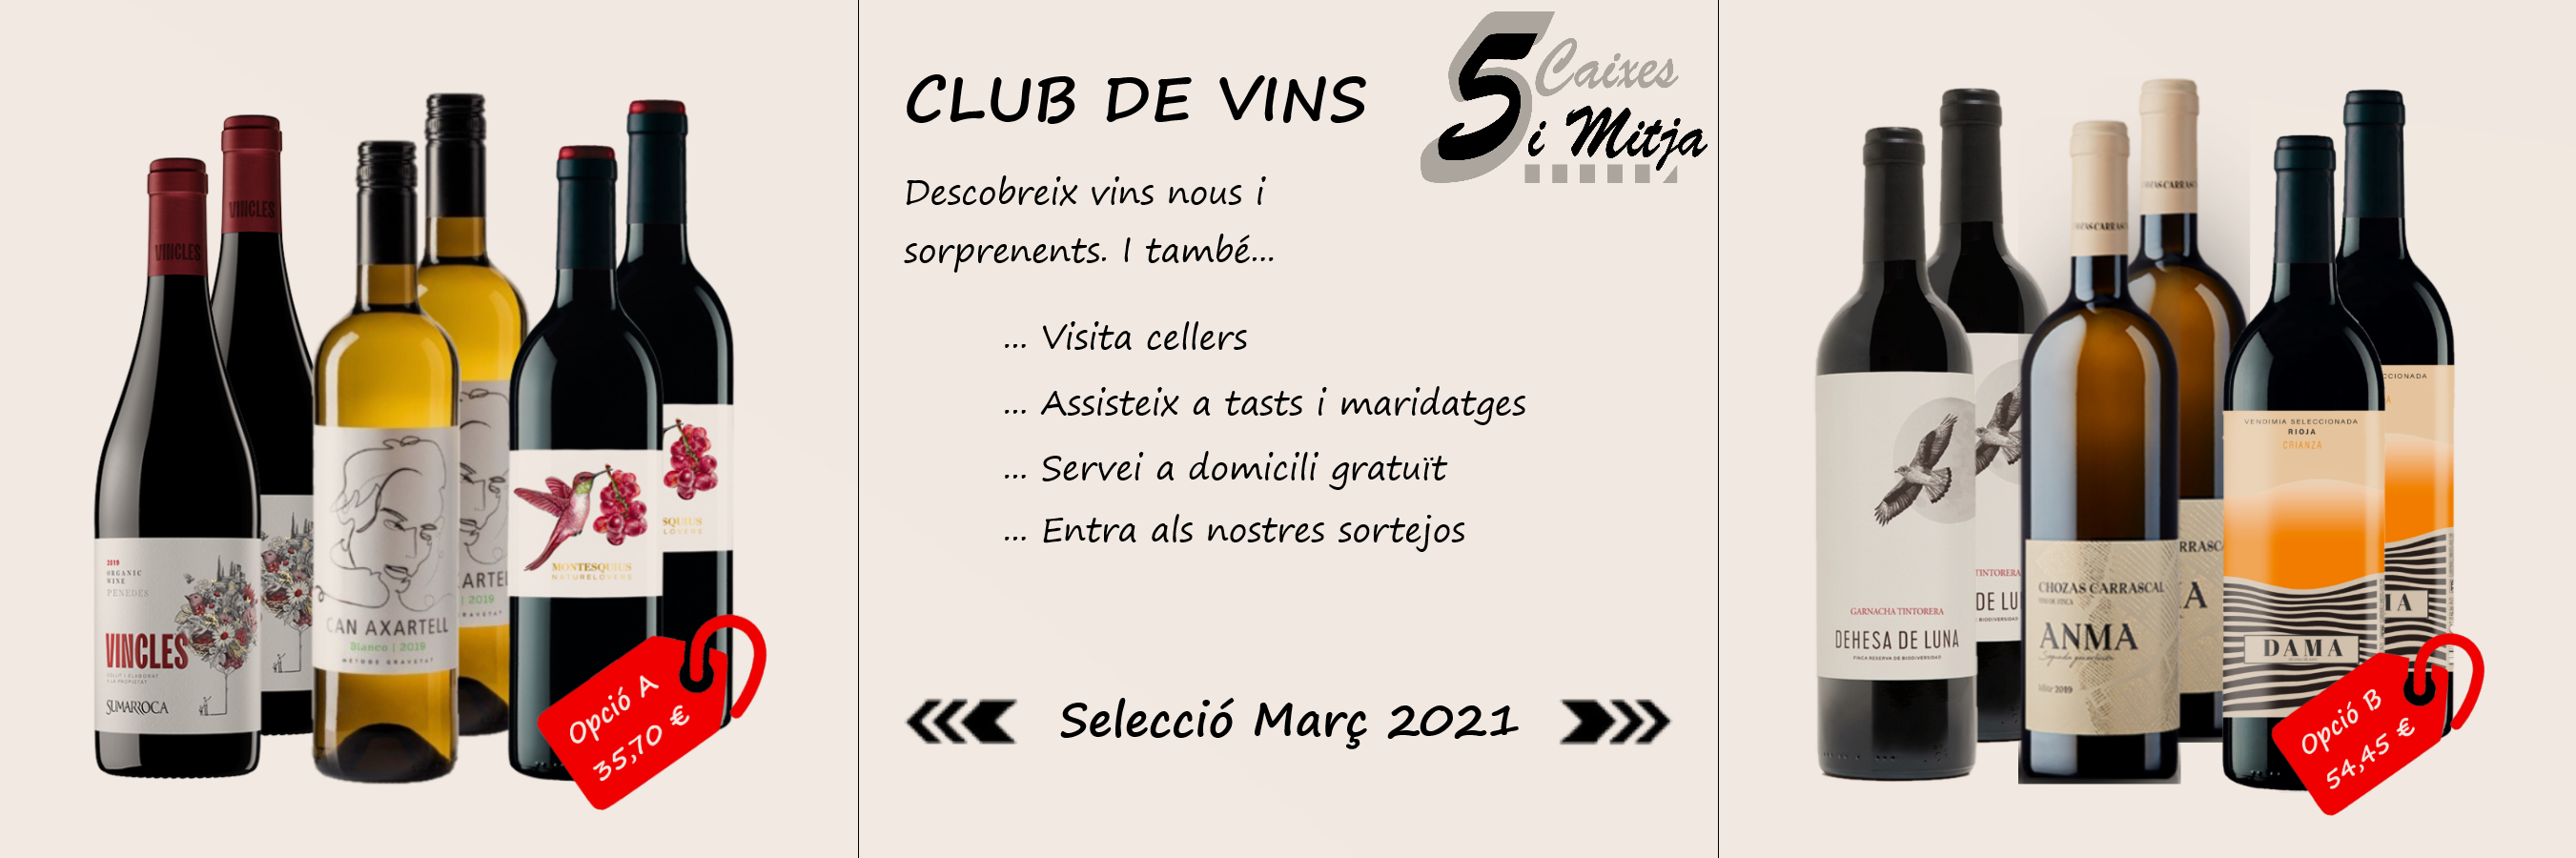 CLUB DE VINS MARÇ 2021